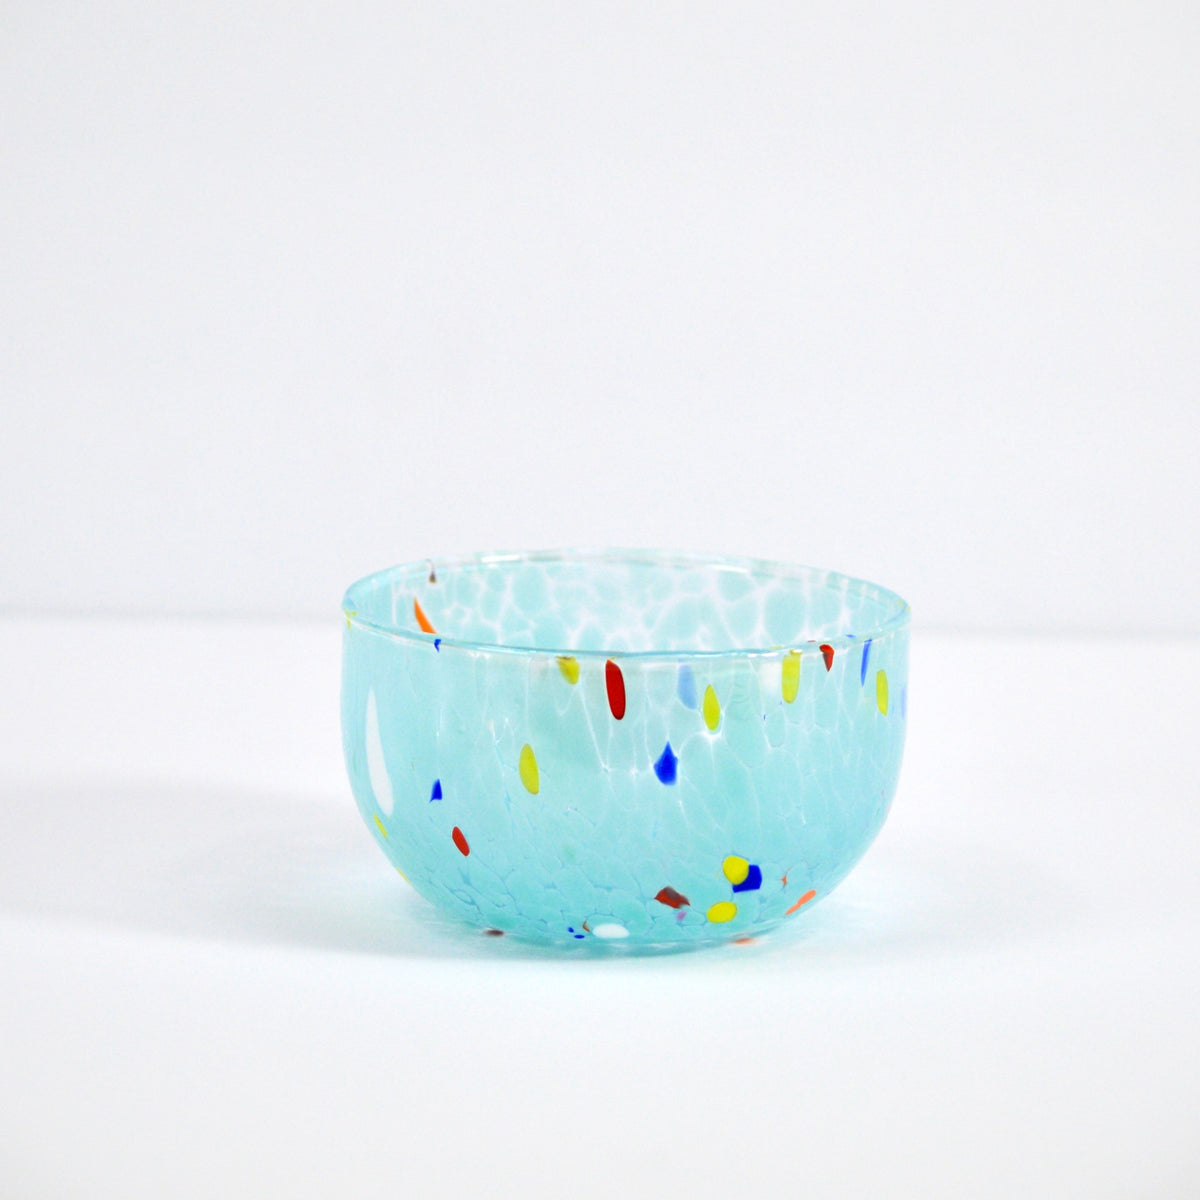 Fresca Murano Glass Bowl, Made in Italy - My Italian Decor